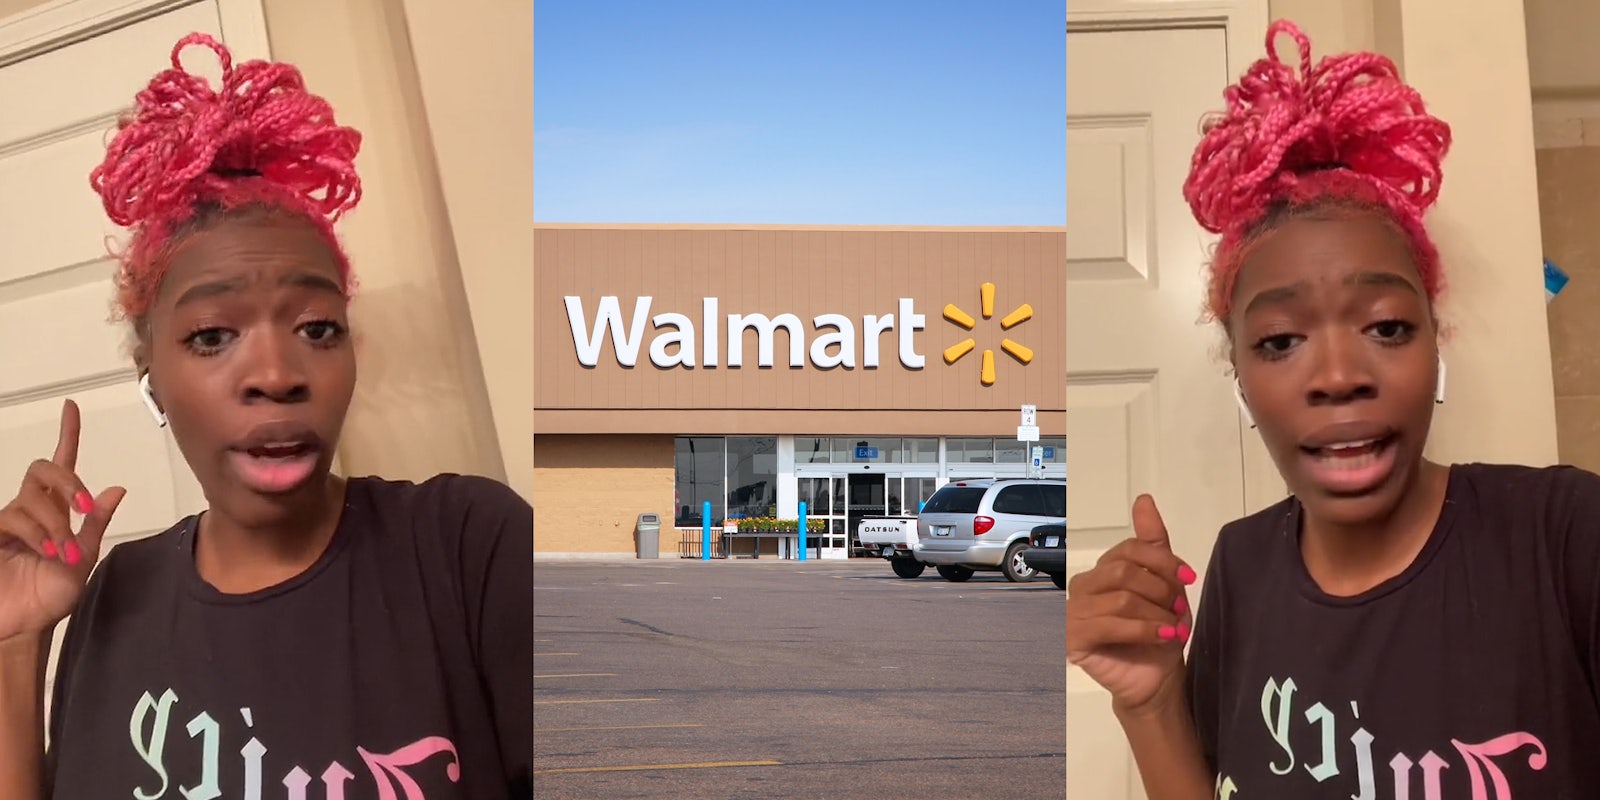 former Walmart employee speaking with finger up (l) Walmart building with sign (c) former Walmart employee speaking (r)